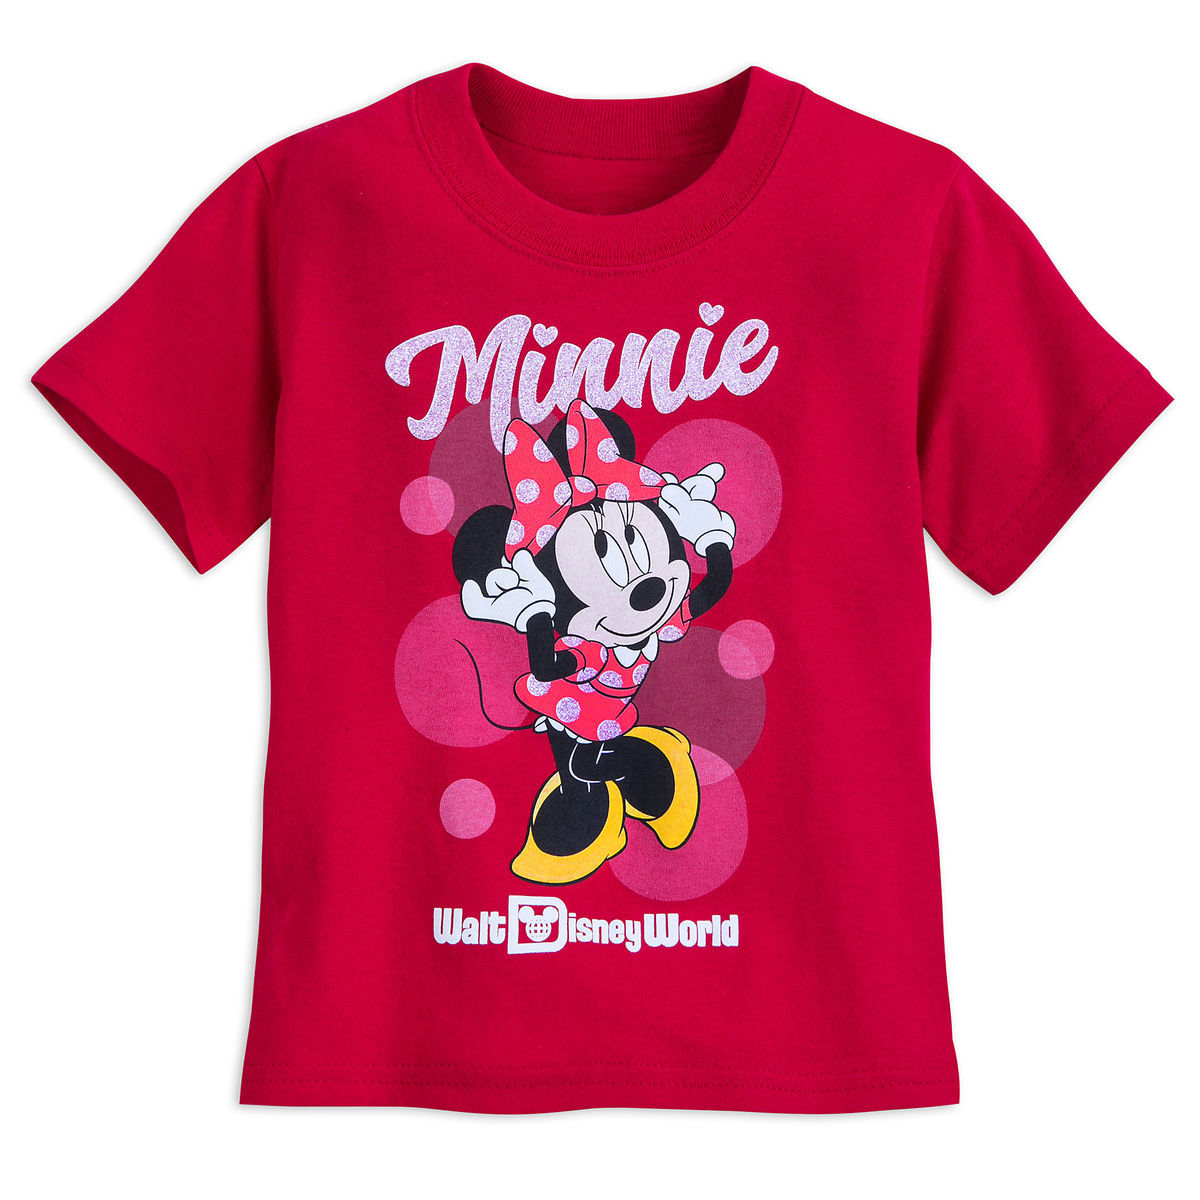 Sweatshirt Langarm  Disney Minnie Mouse Longshirt türkis Gr  80 86 92  Püttmann 